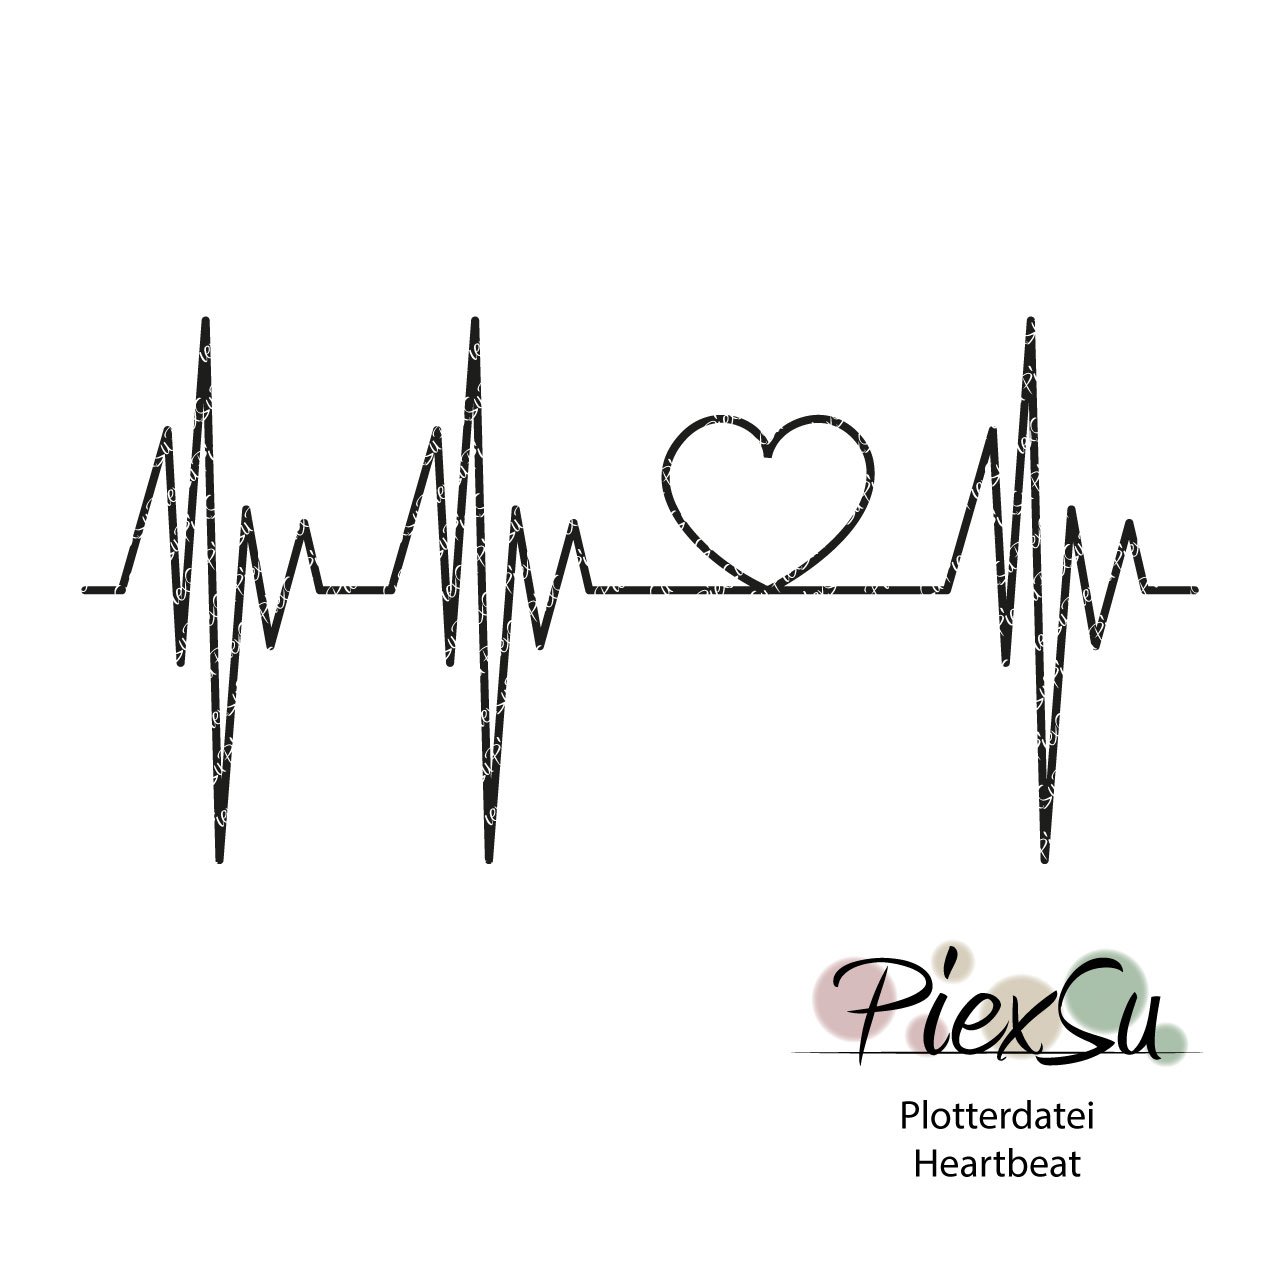 PiexSu-Plotterdatei-Set---heartbeat-png-jpg-dxf-svg-plotten-silhouette-cameo